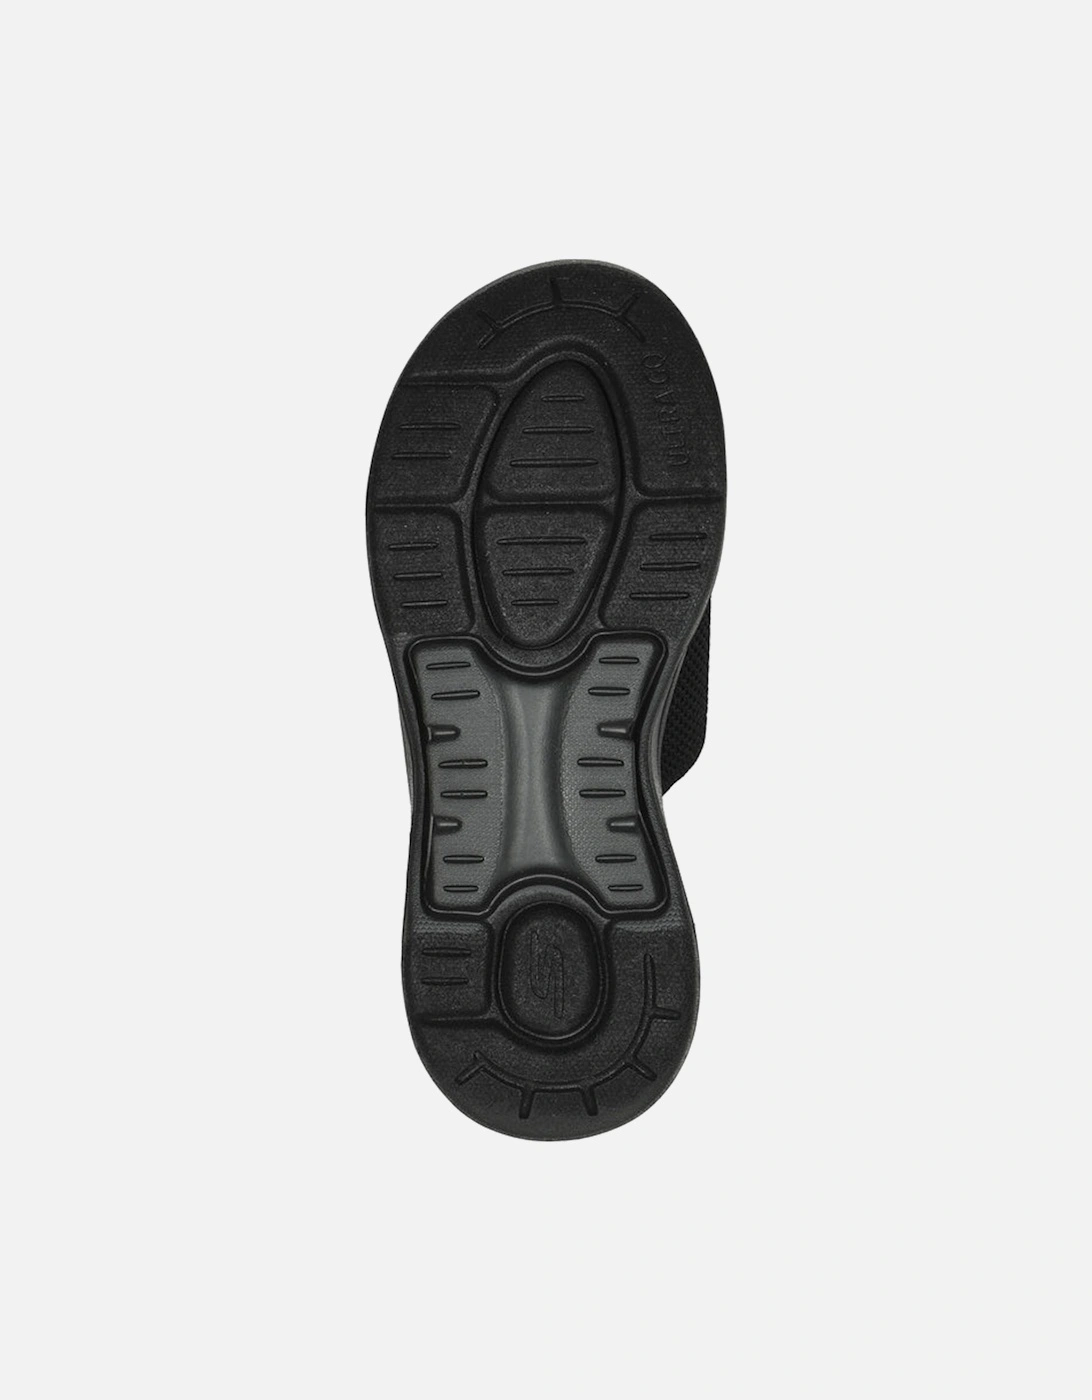 Skechers Womens Go Walk Arch Fit Sandals (Black)